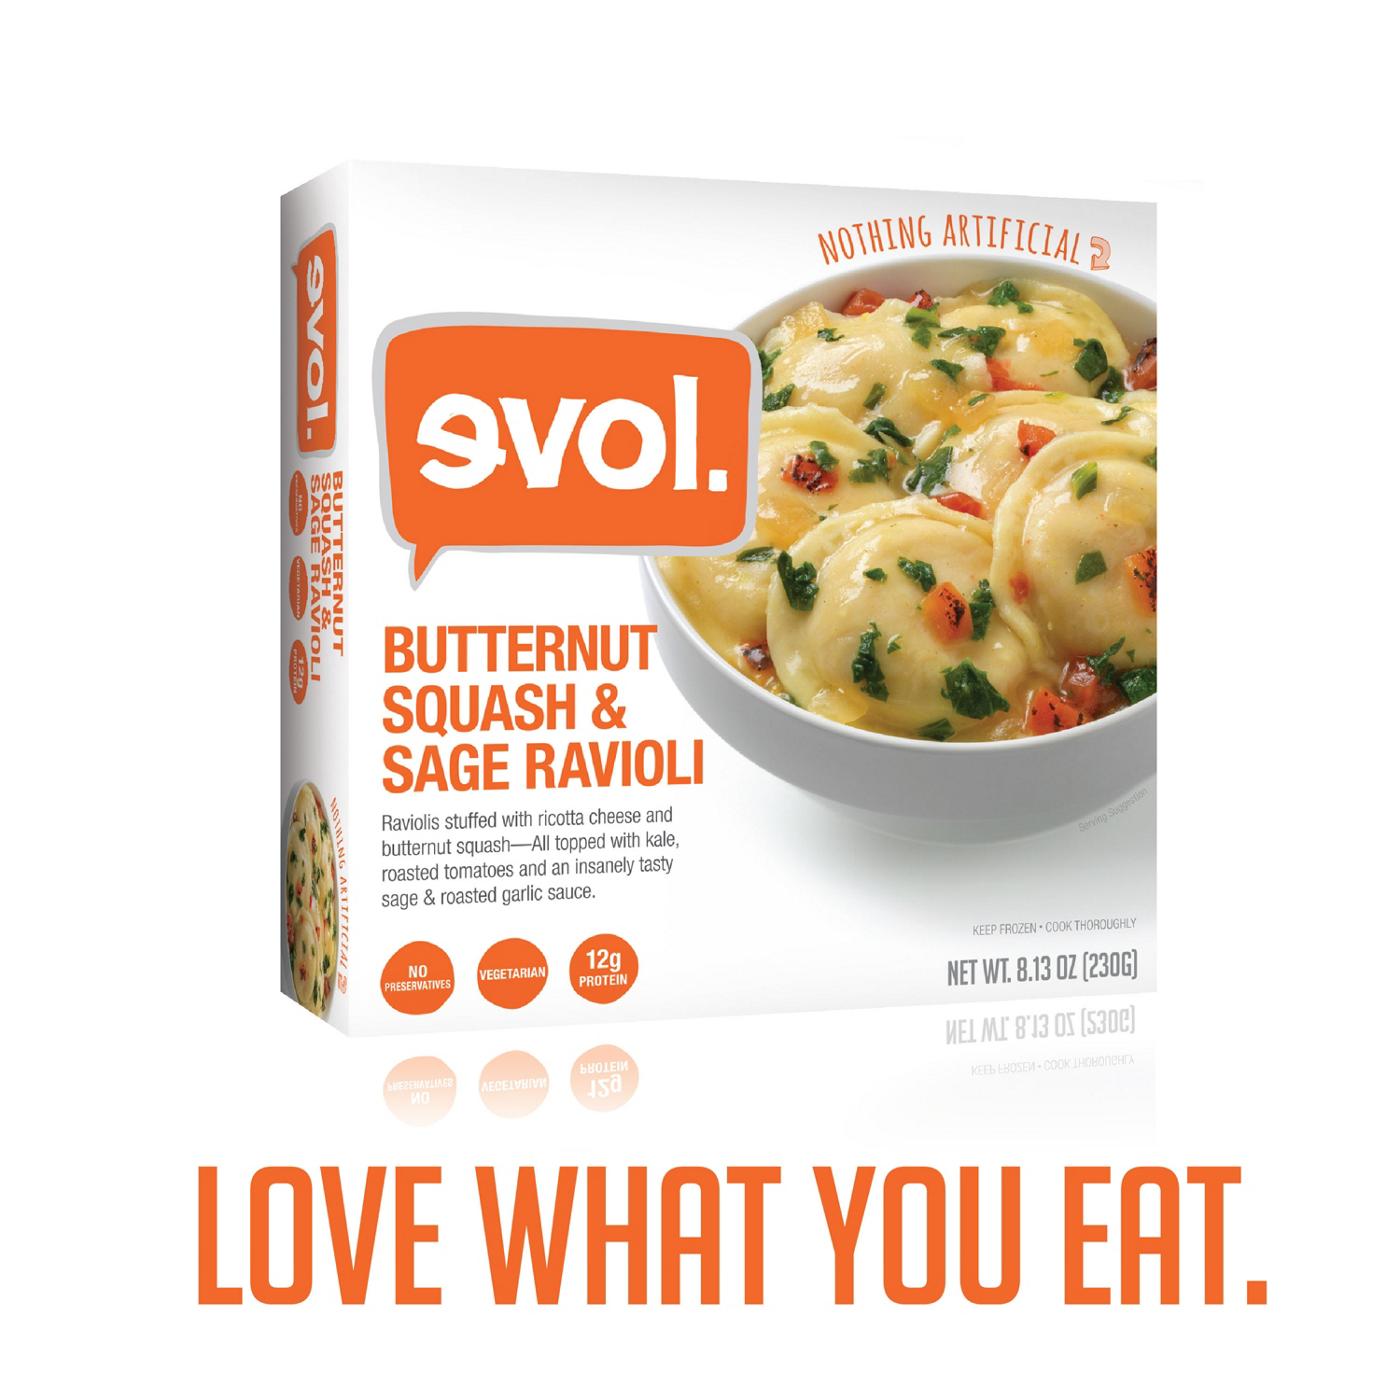 Evol 11g Protein Butternut Squash & Sage Ravioli Frozen Meal; image 2 of 6